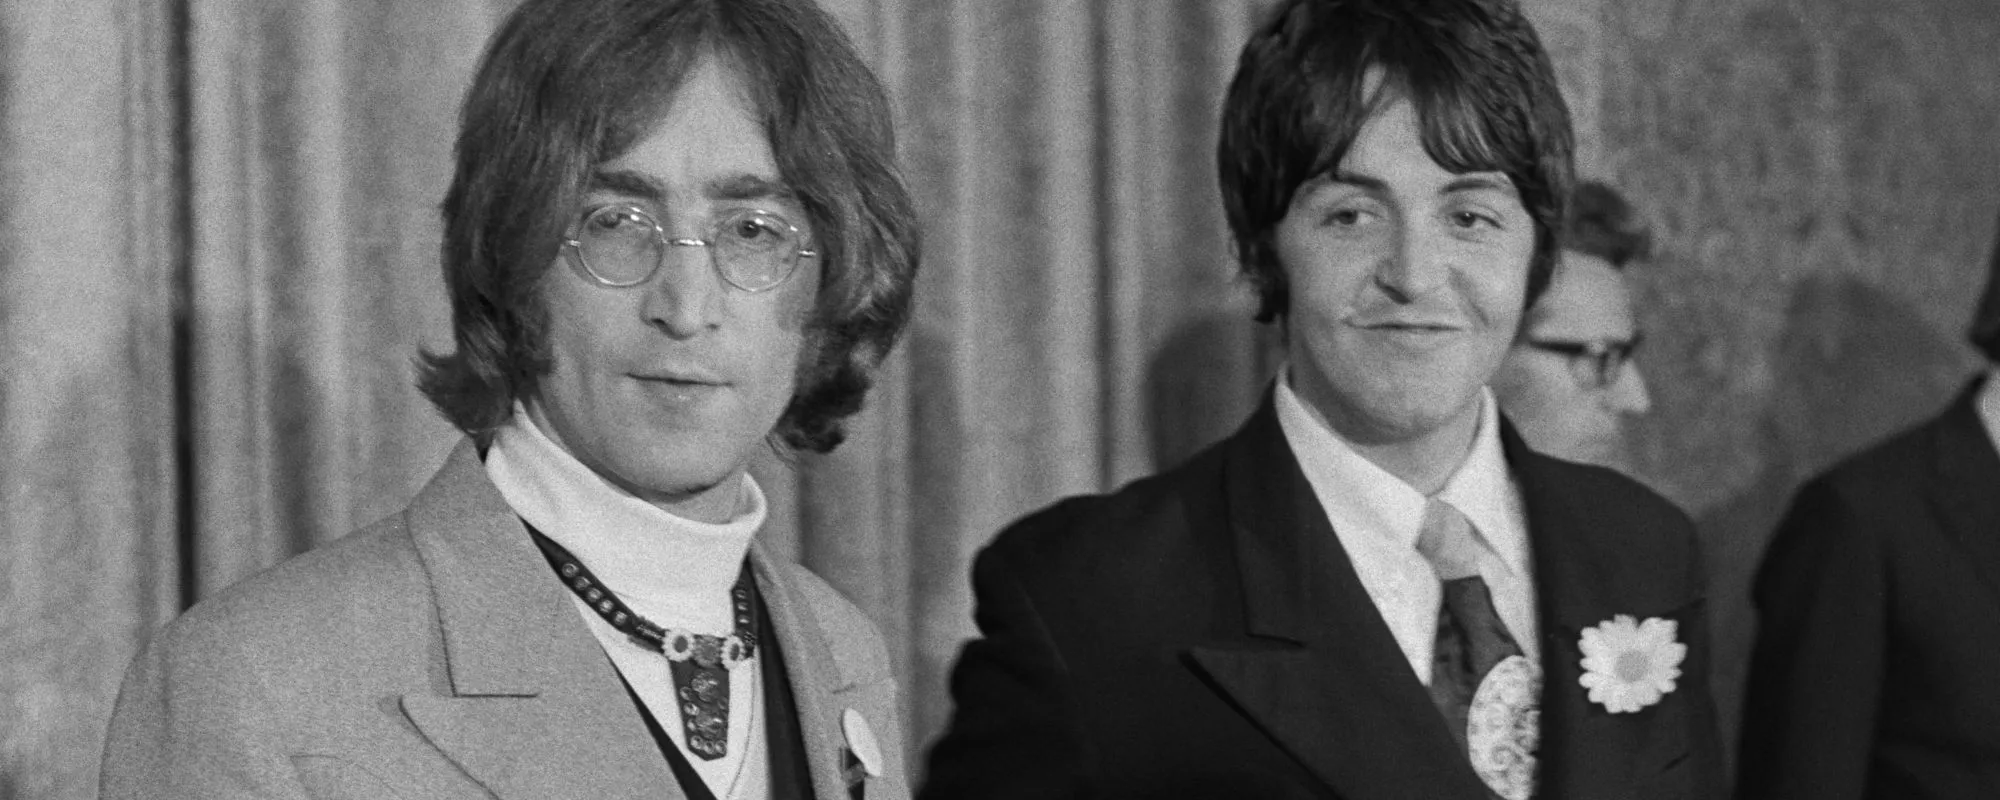 John Lennon looks off to the side, Paul McCartney stands beside him smiling